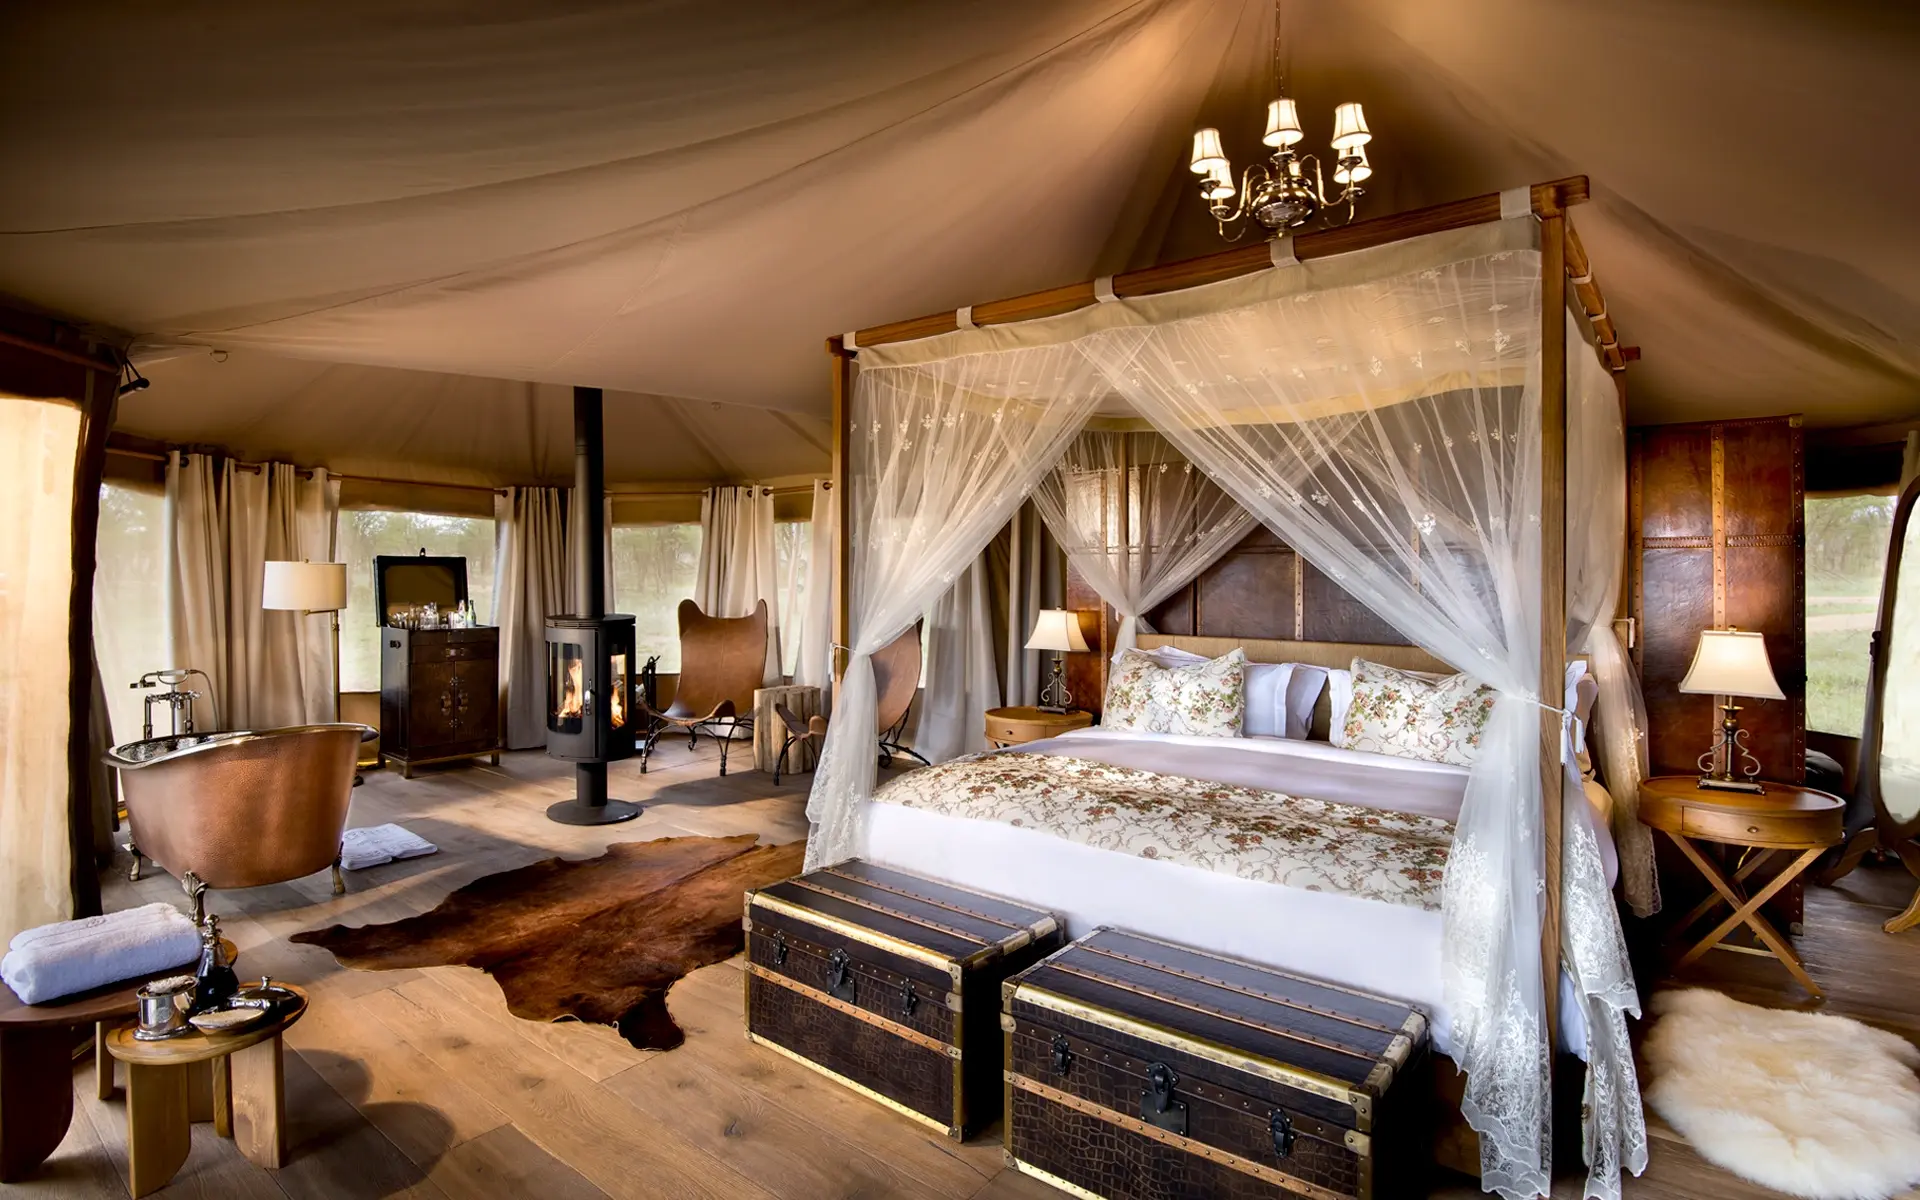 Upscale safari tent lodging in Tanzania